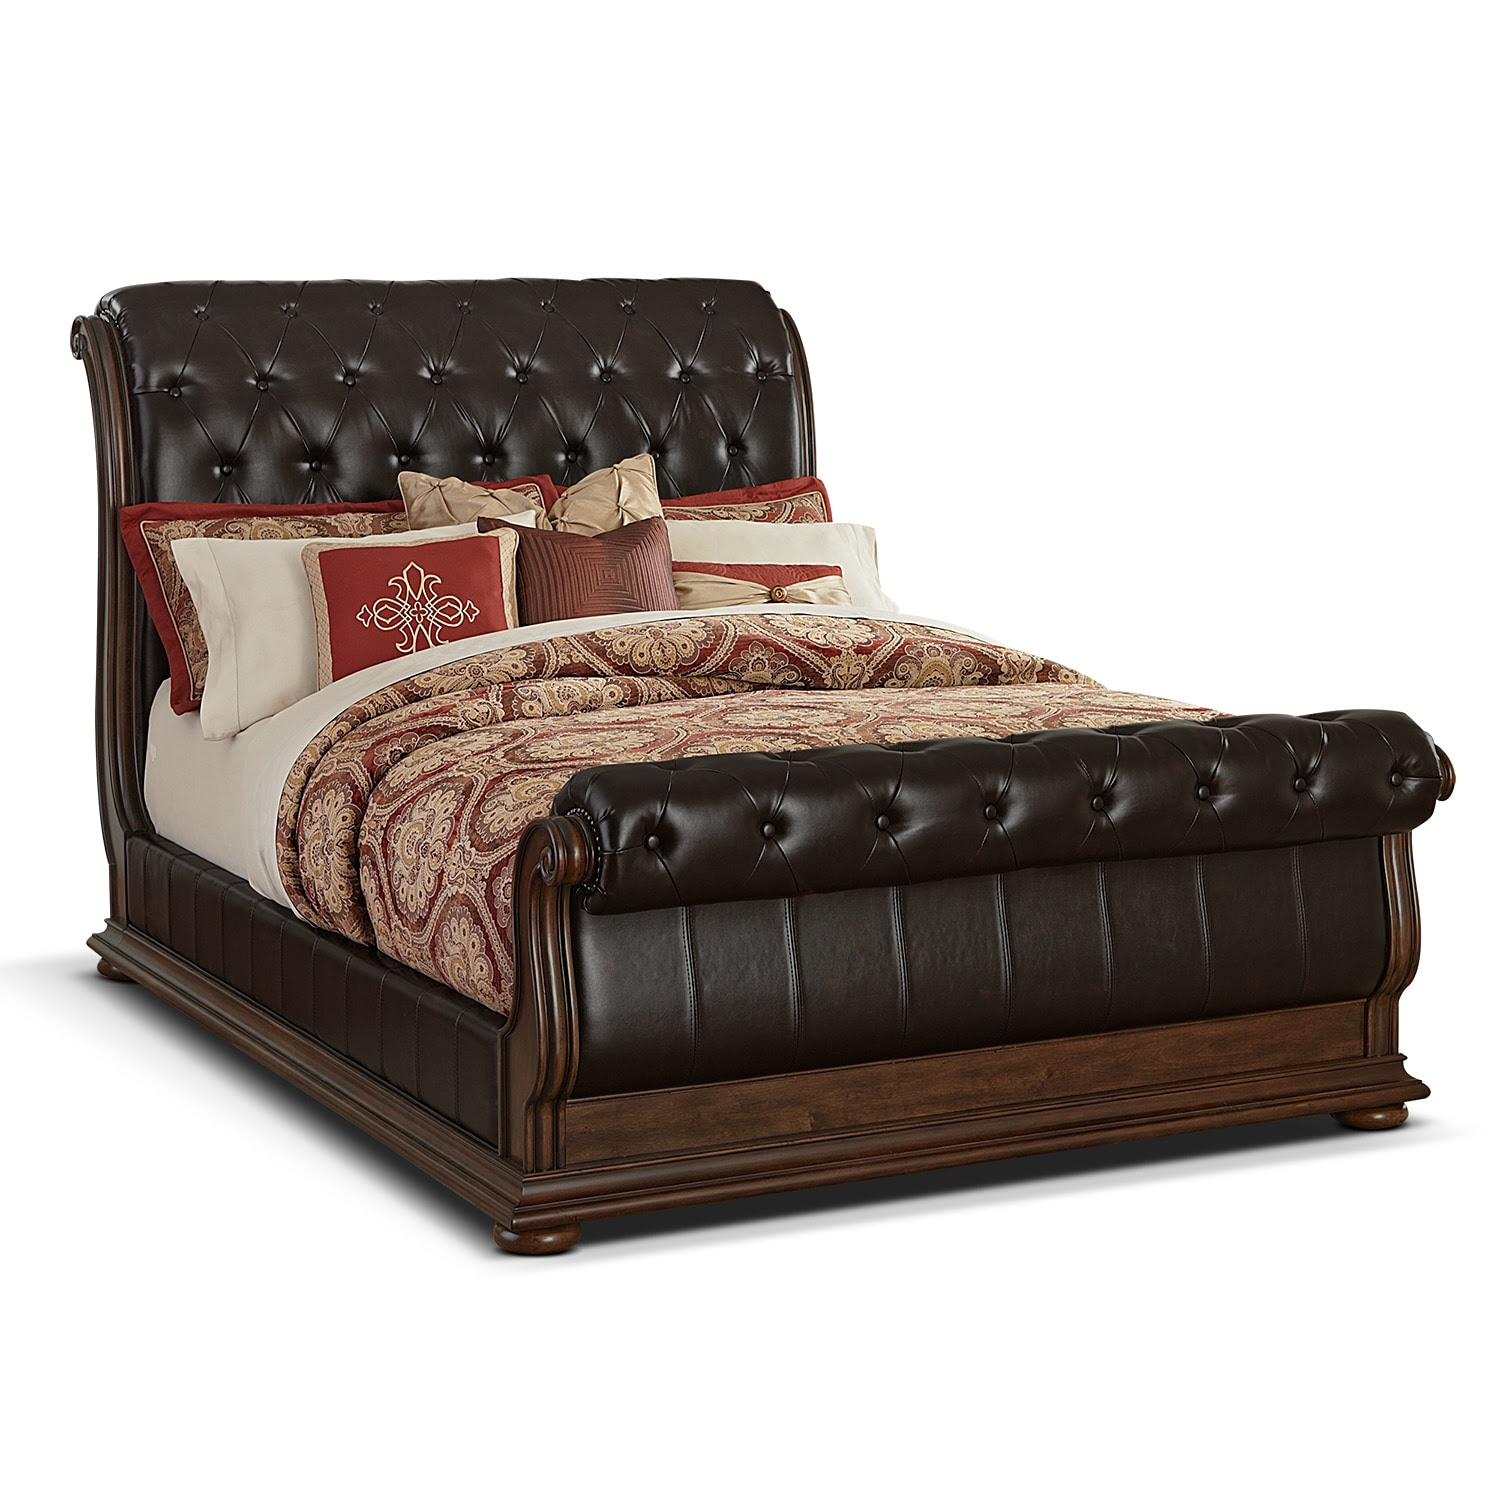 Monticello Pecan II King Bed | American Signature Furniture